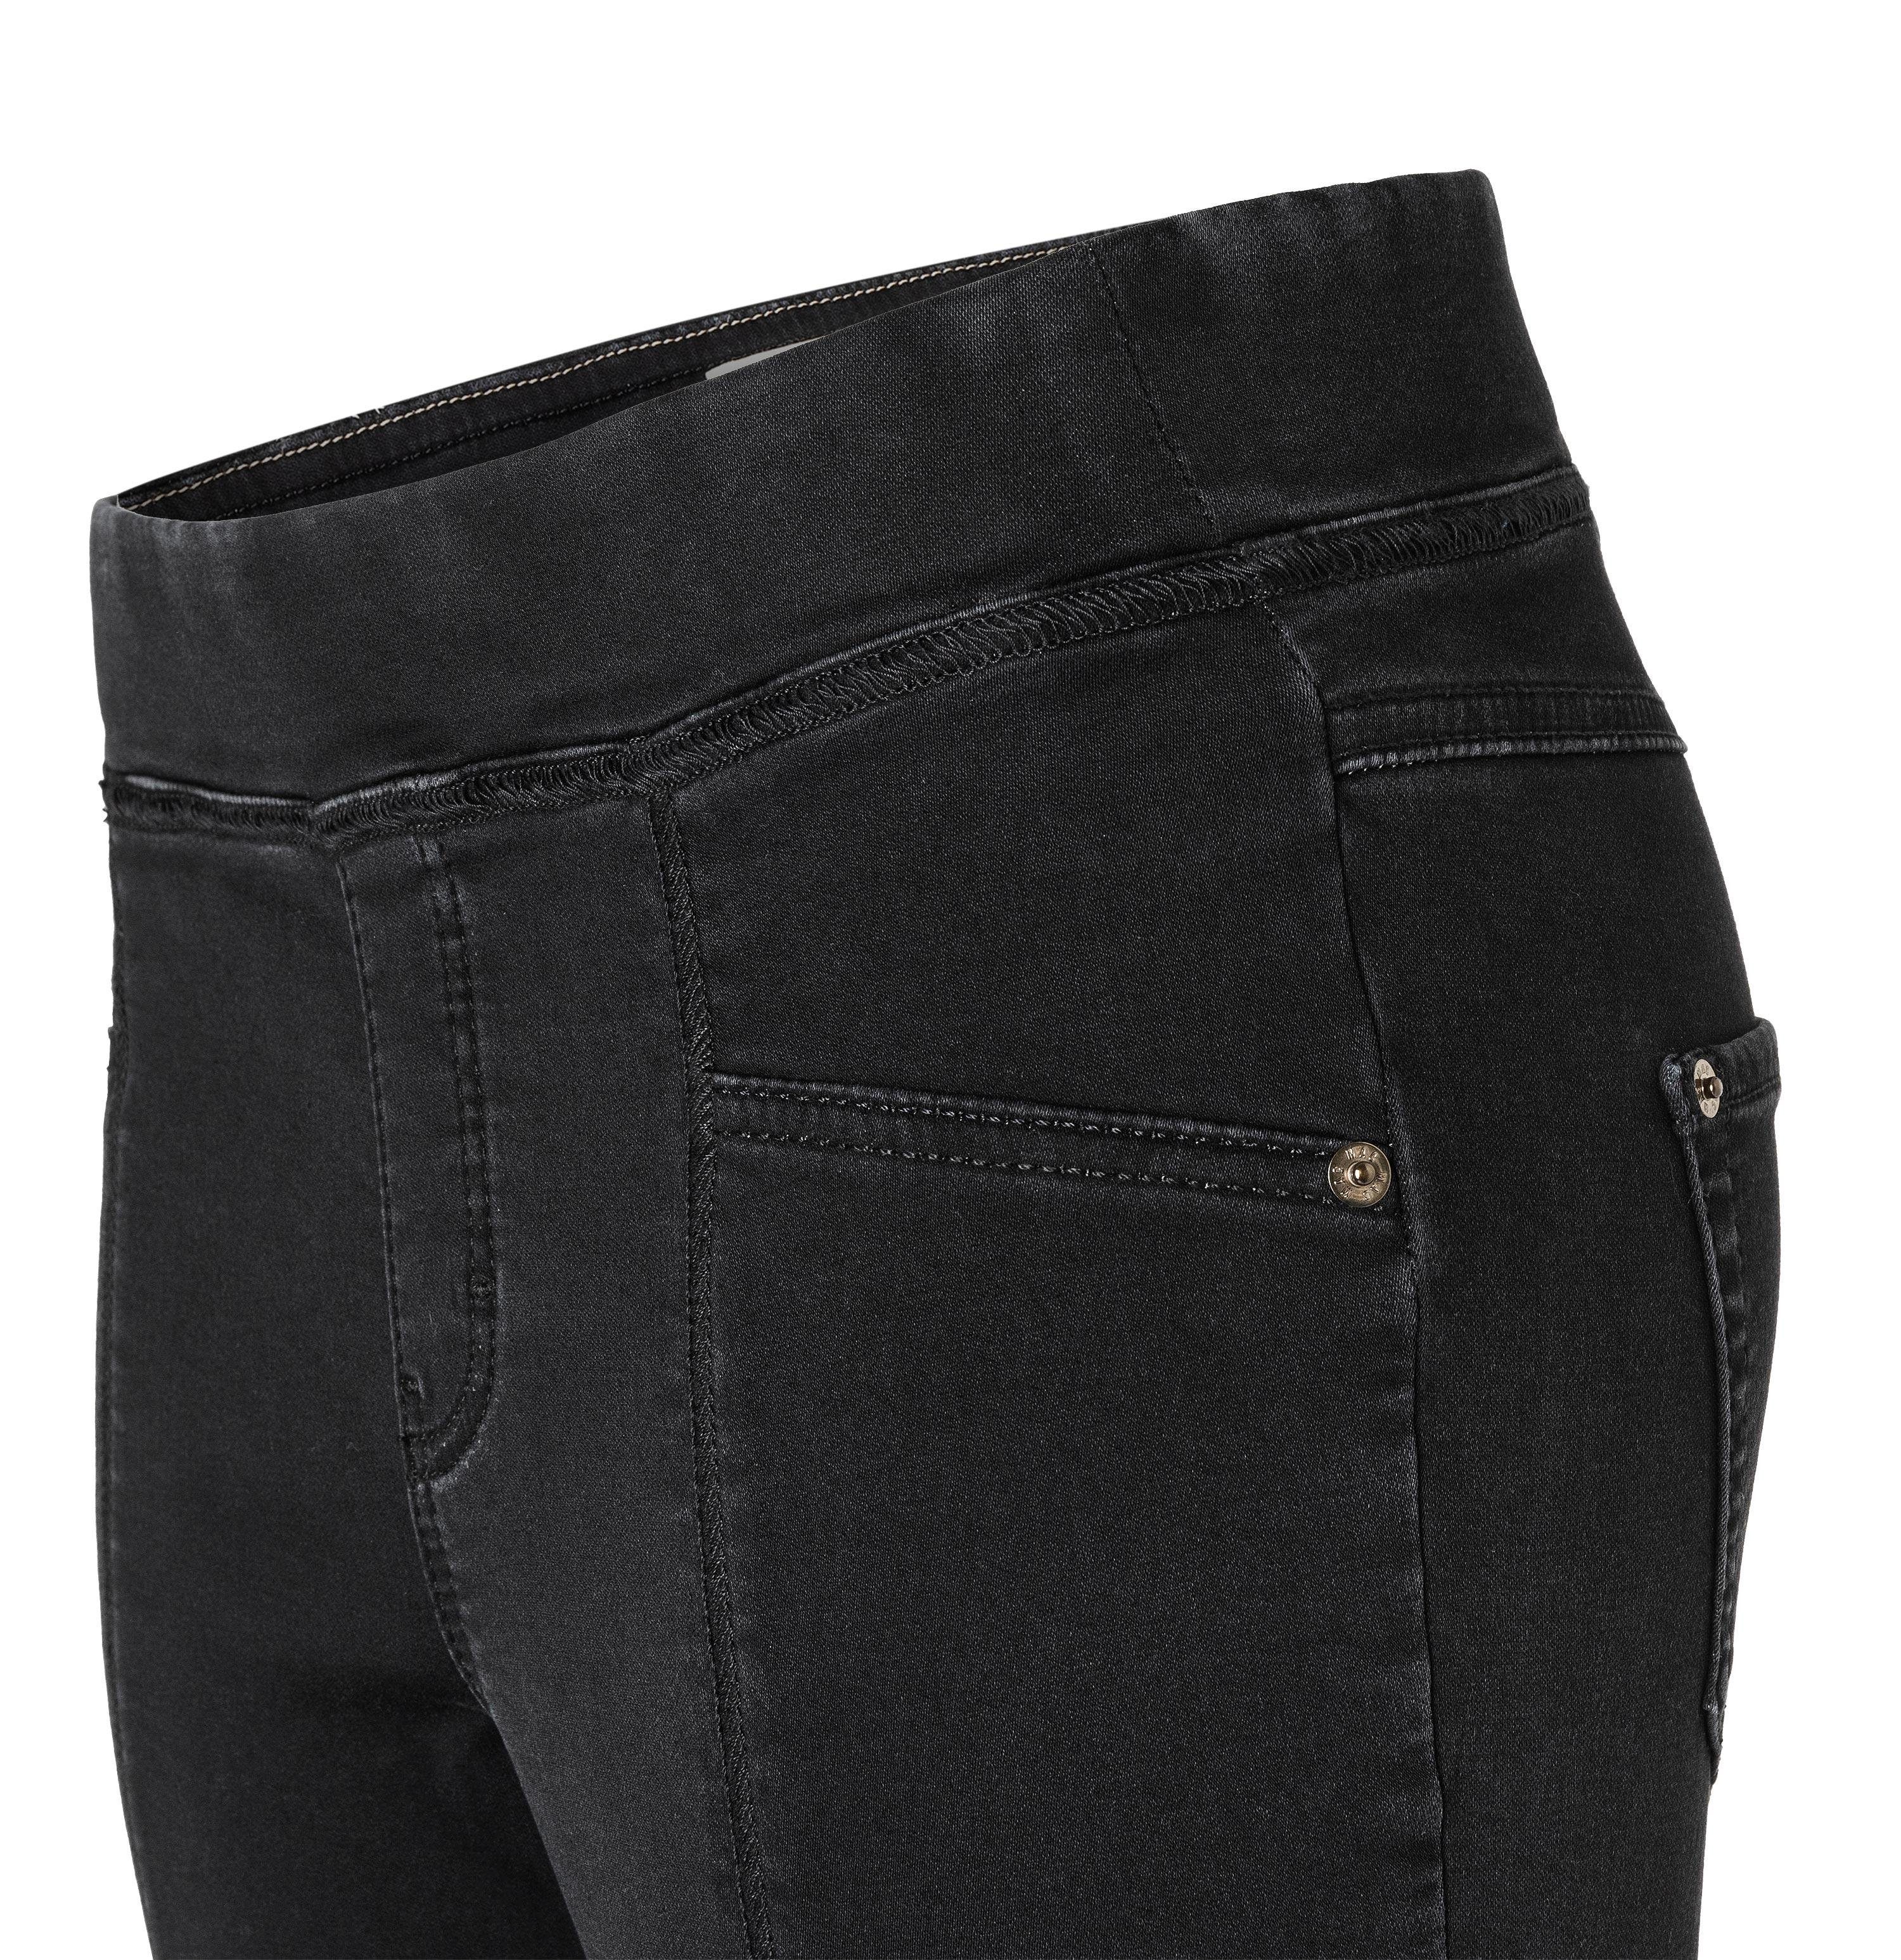 cosy D991 SOFT - black 5907-90-0350 DENIM ISKO™ LEGGINGS unbekannt Stretch-Jeans rinsewash MAC MAC